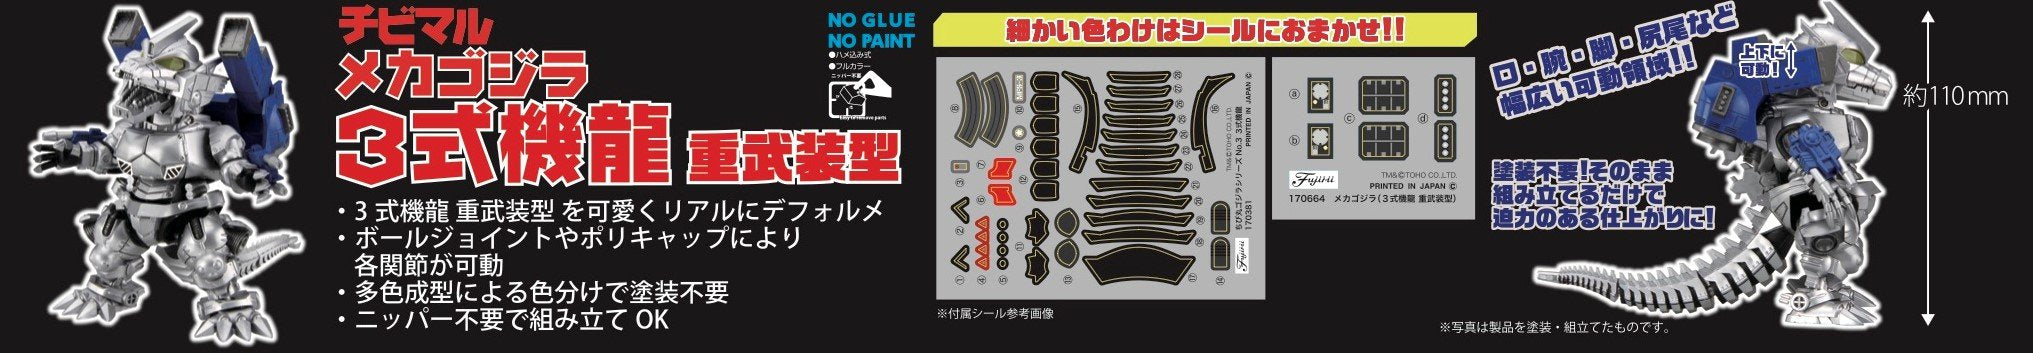 Fujimi Chibimaru Godzilla5 Mechagodzilla 3 Kit Gundam japonais de type armé lourd